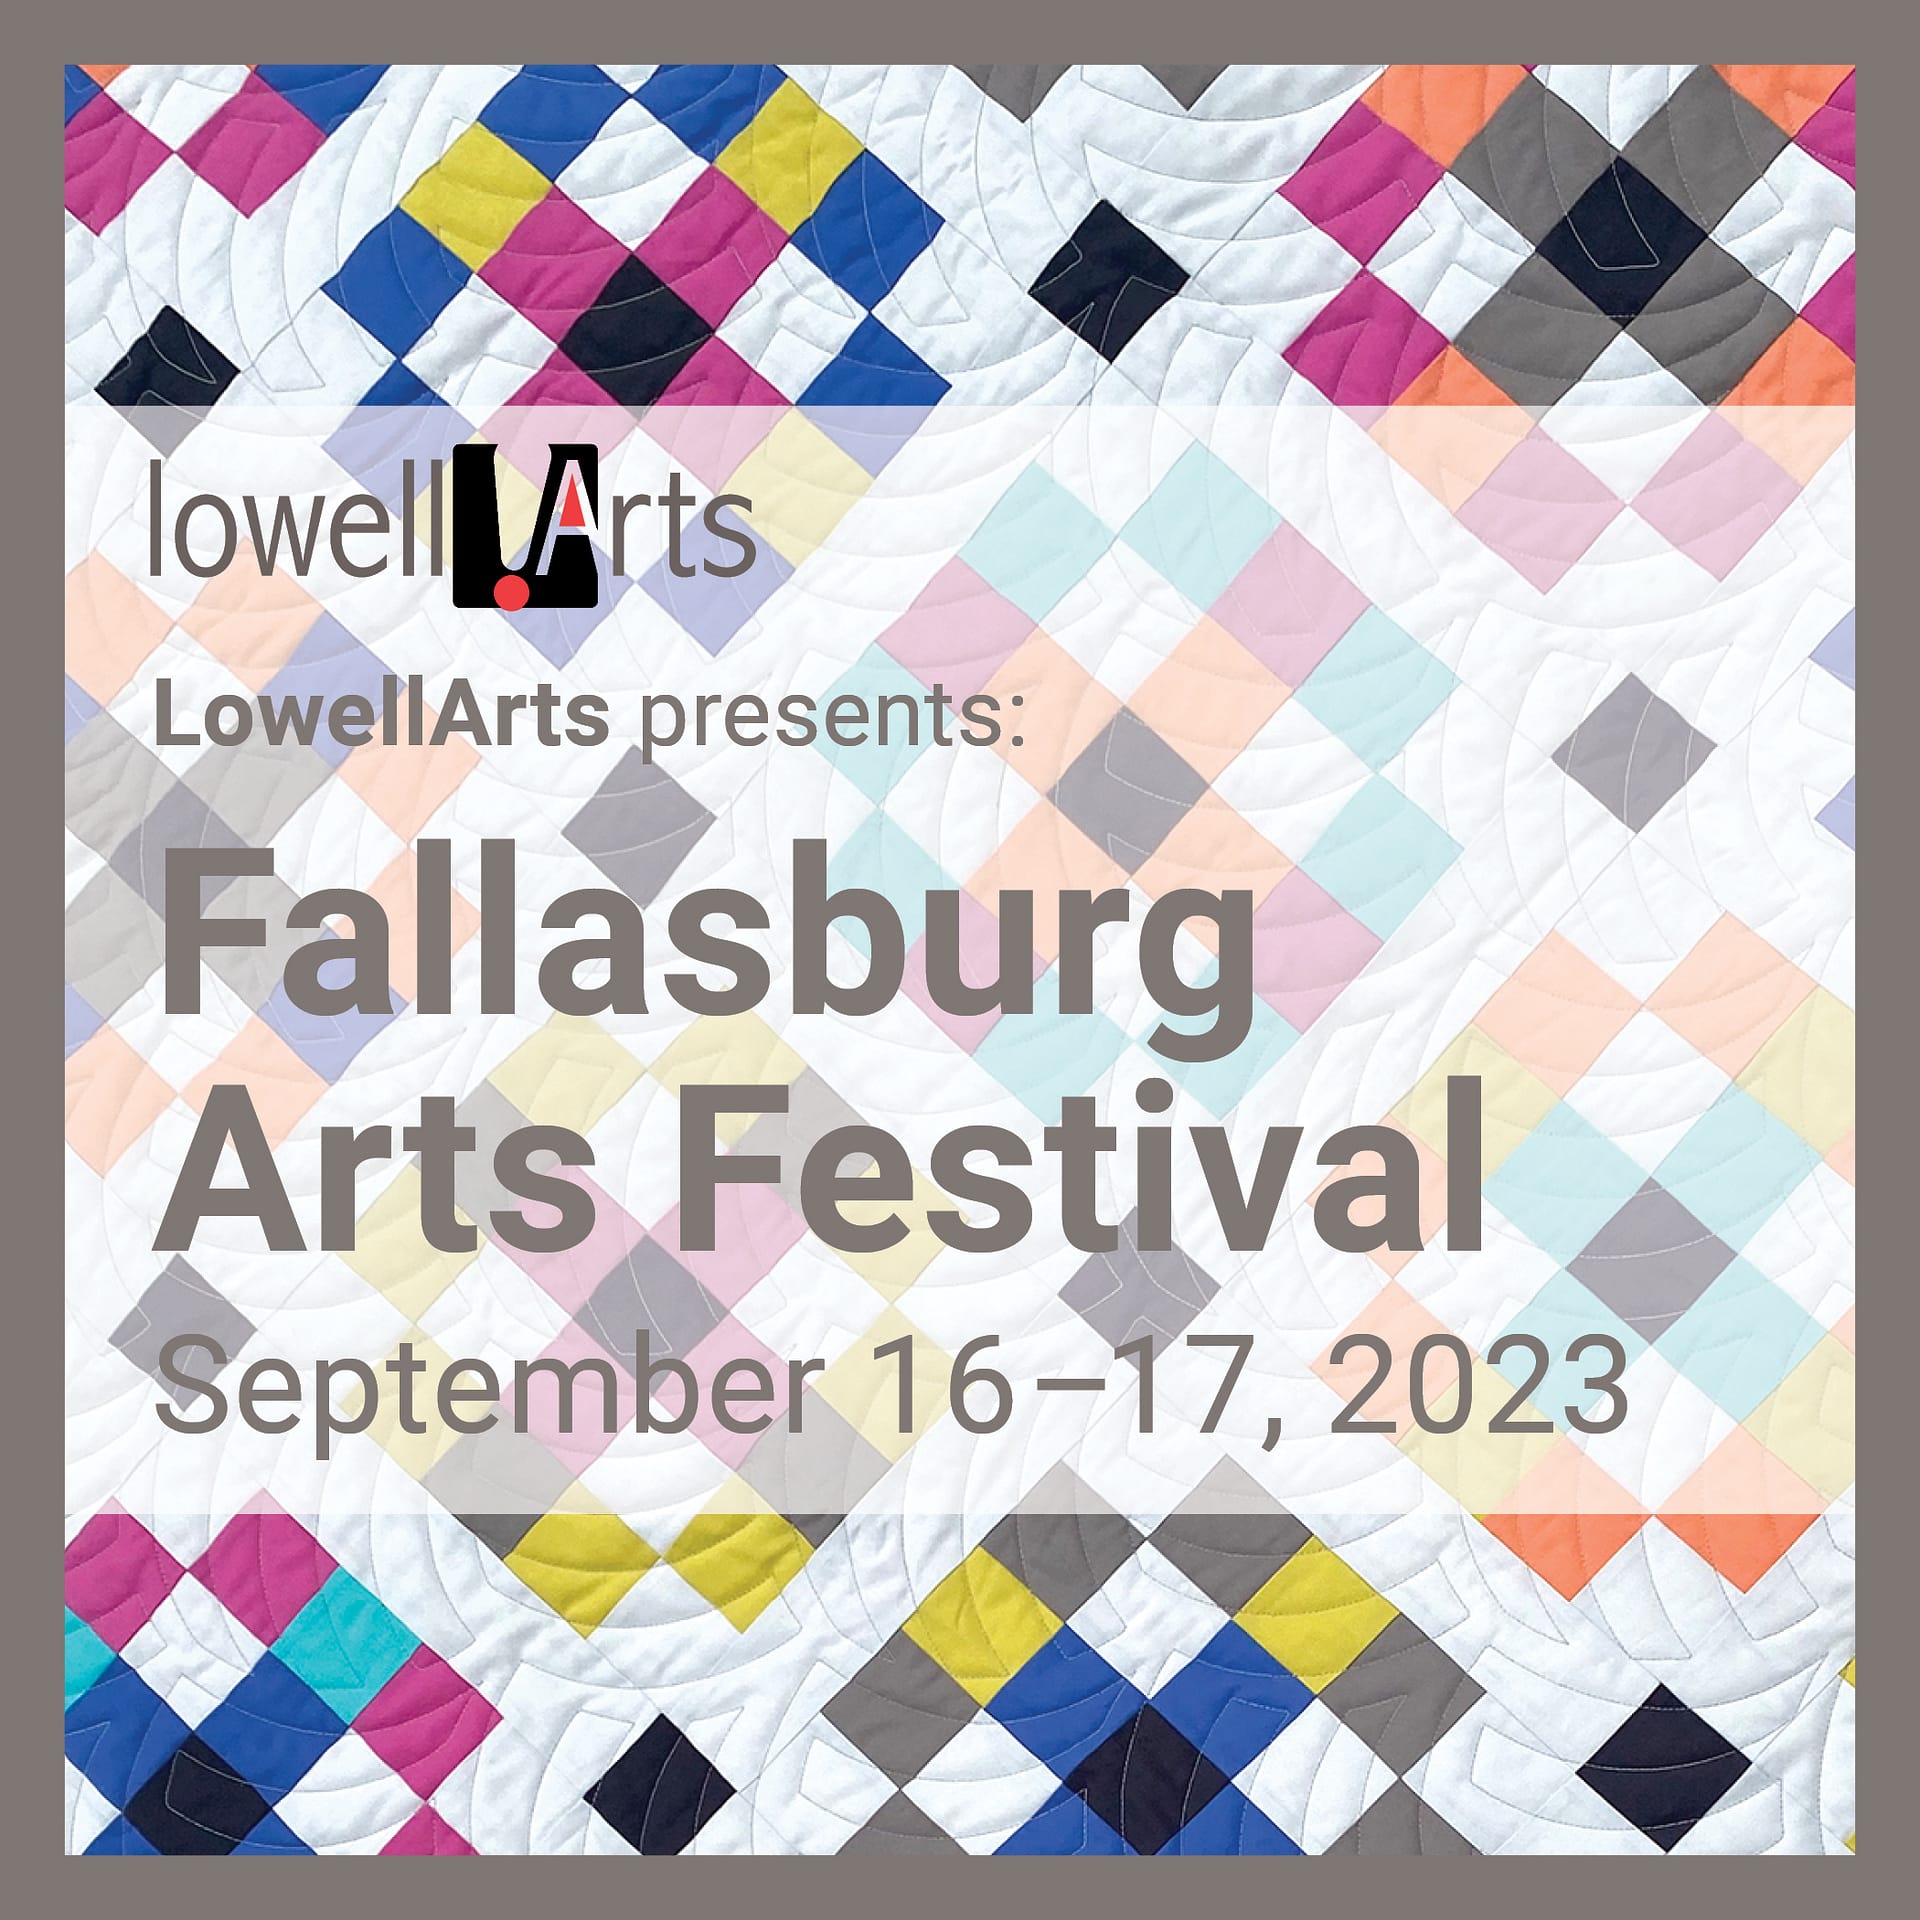 Fallasburg Arts Festival Lowell's First Look